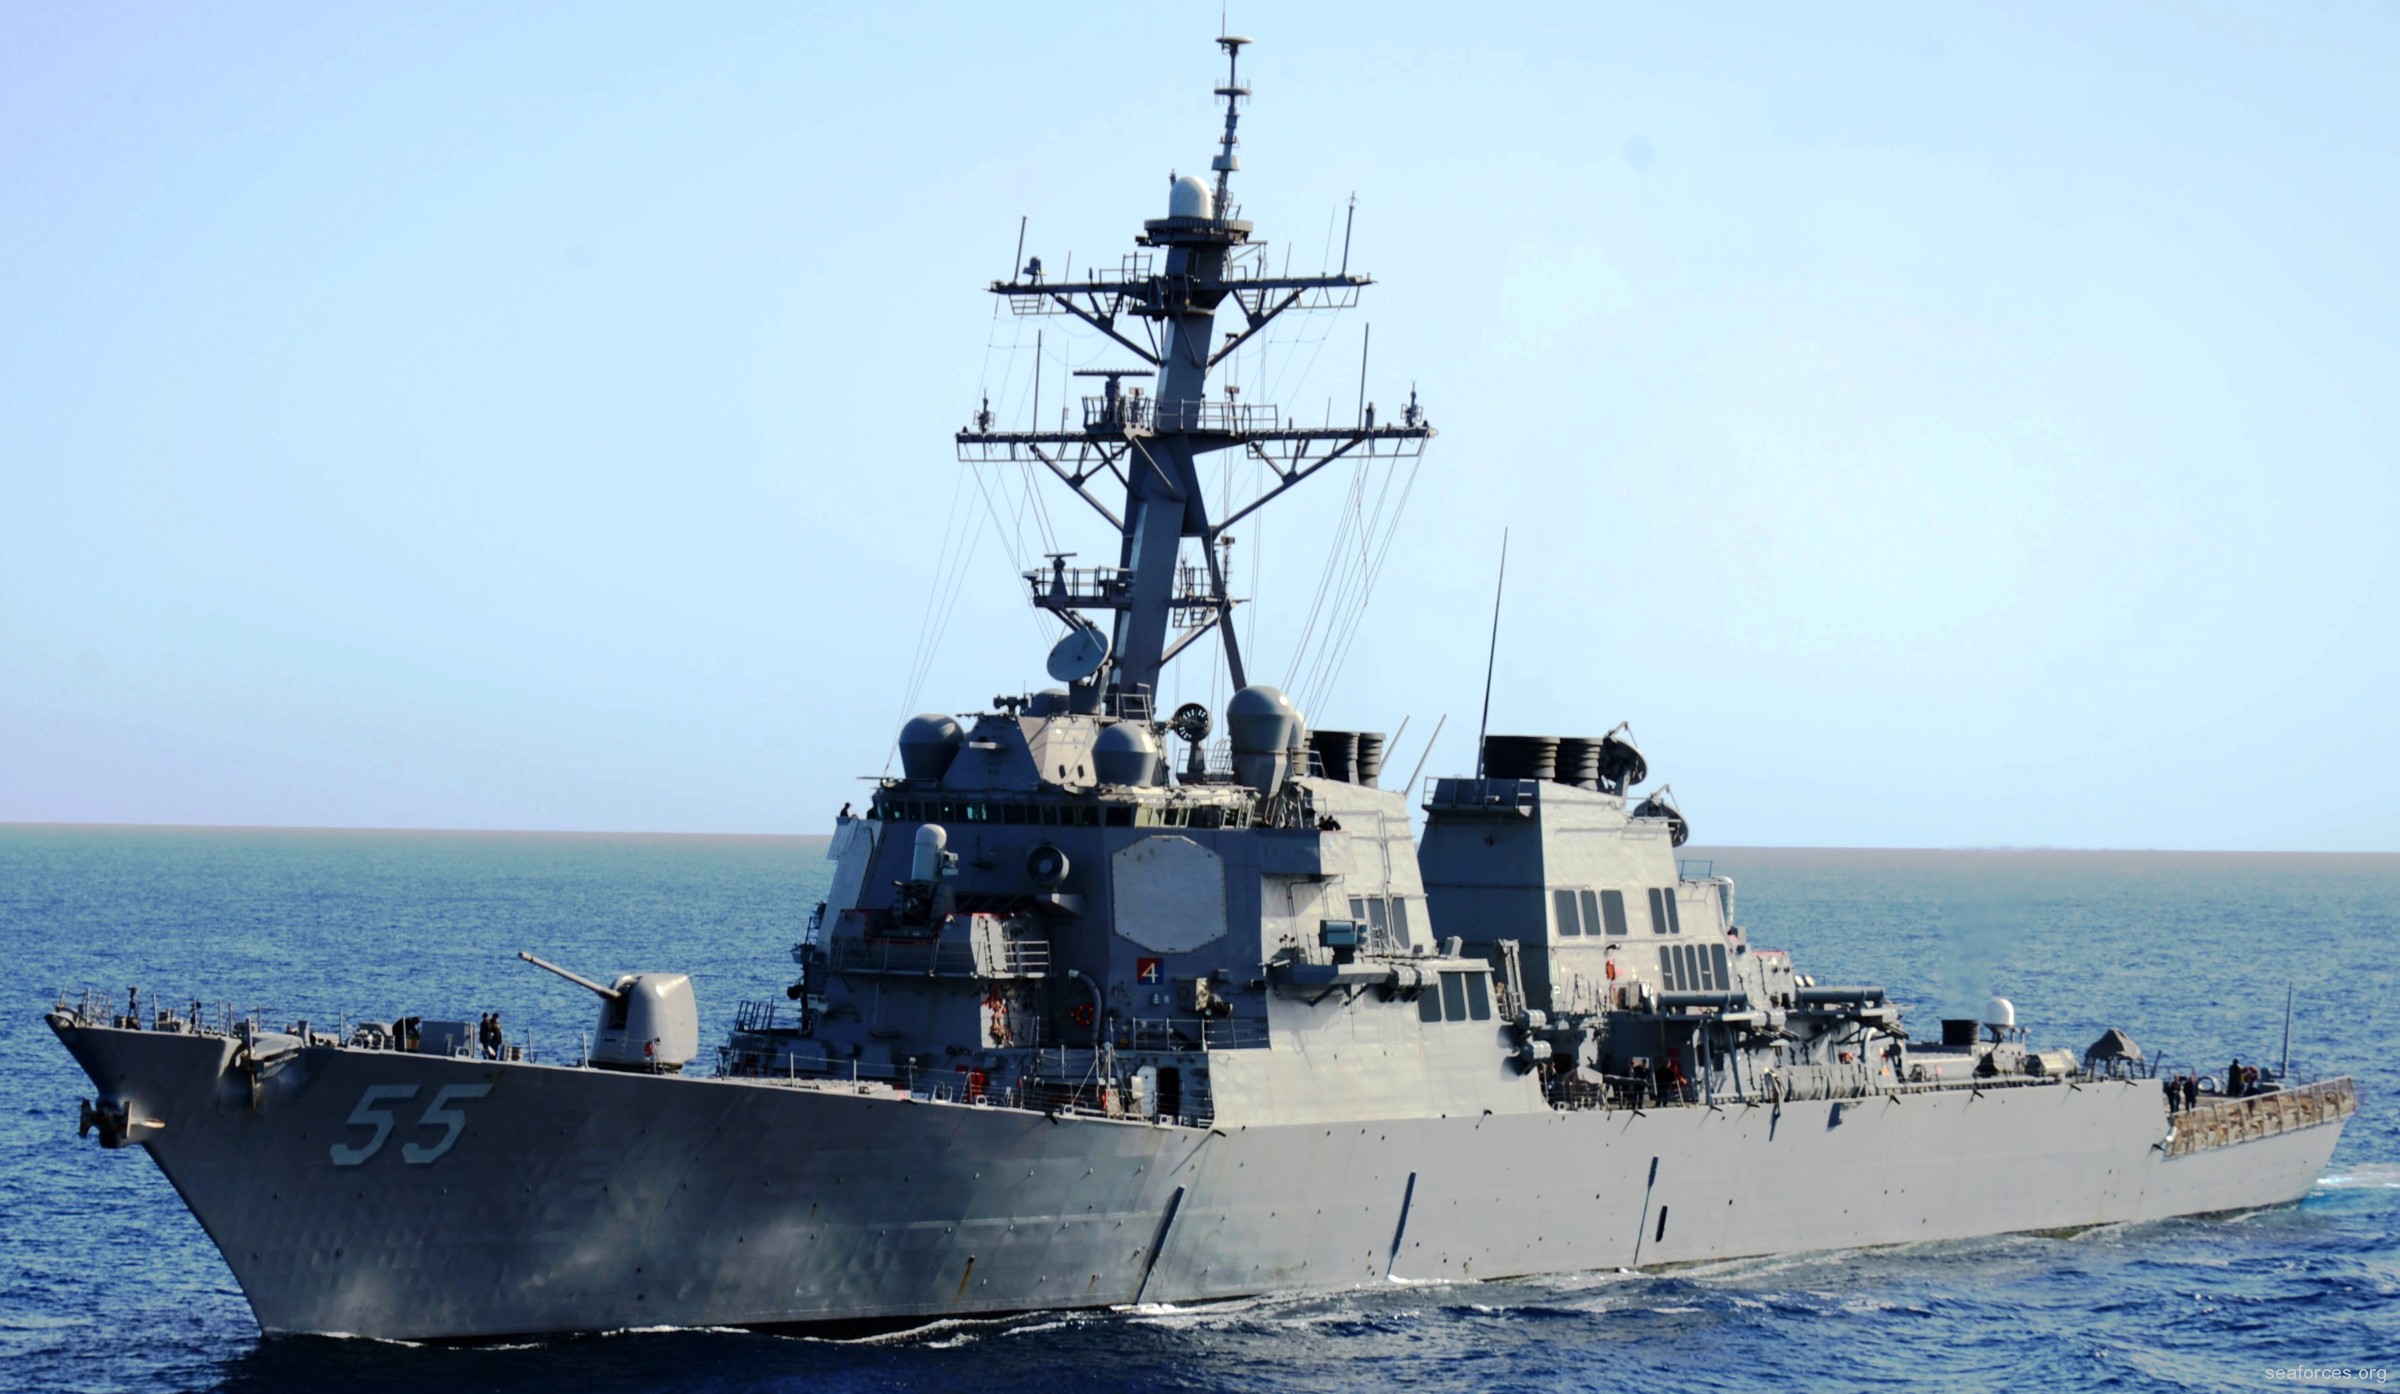 ddg-55 uss stout guided missile destroyer us navy 25 mediterranean sea